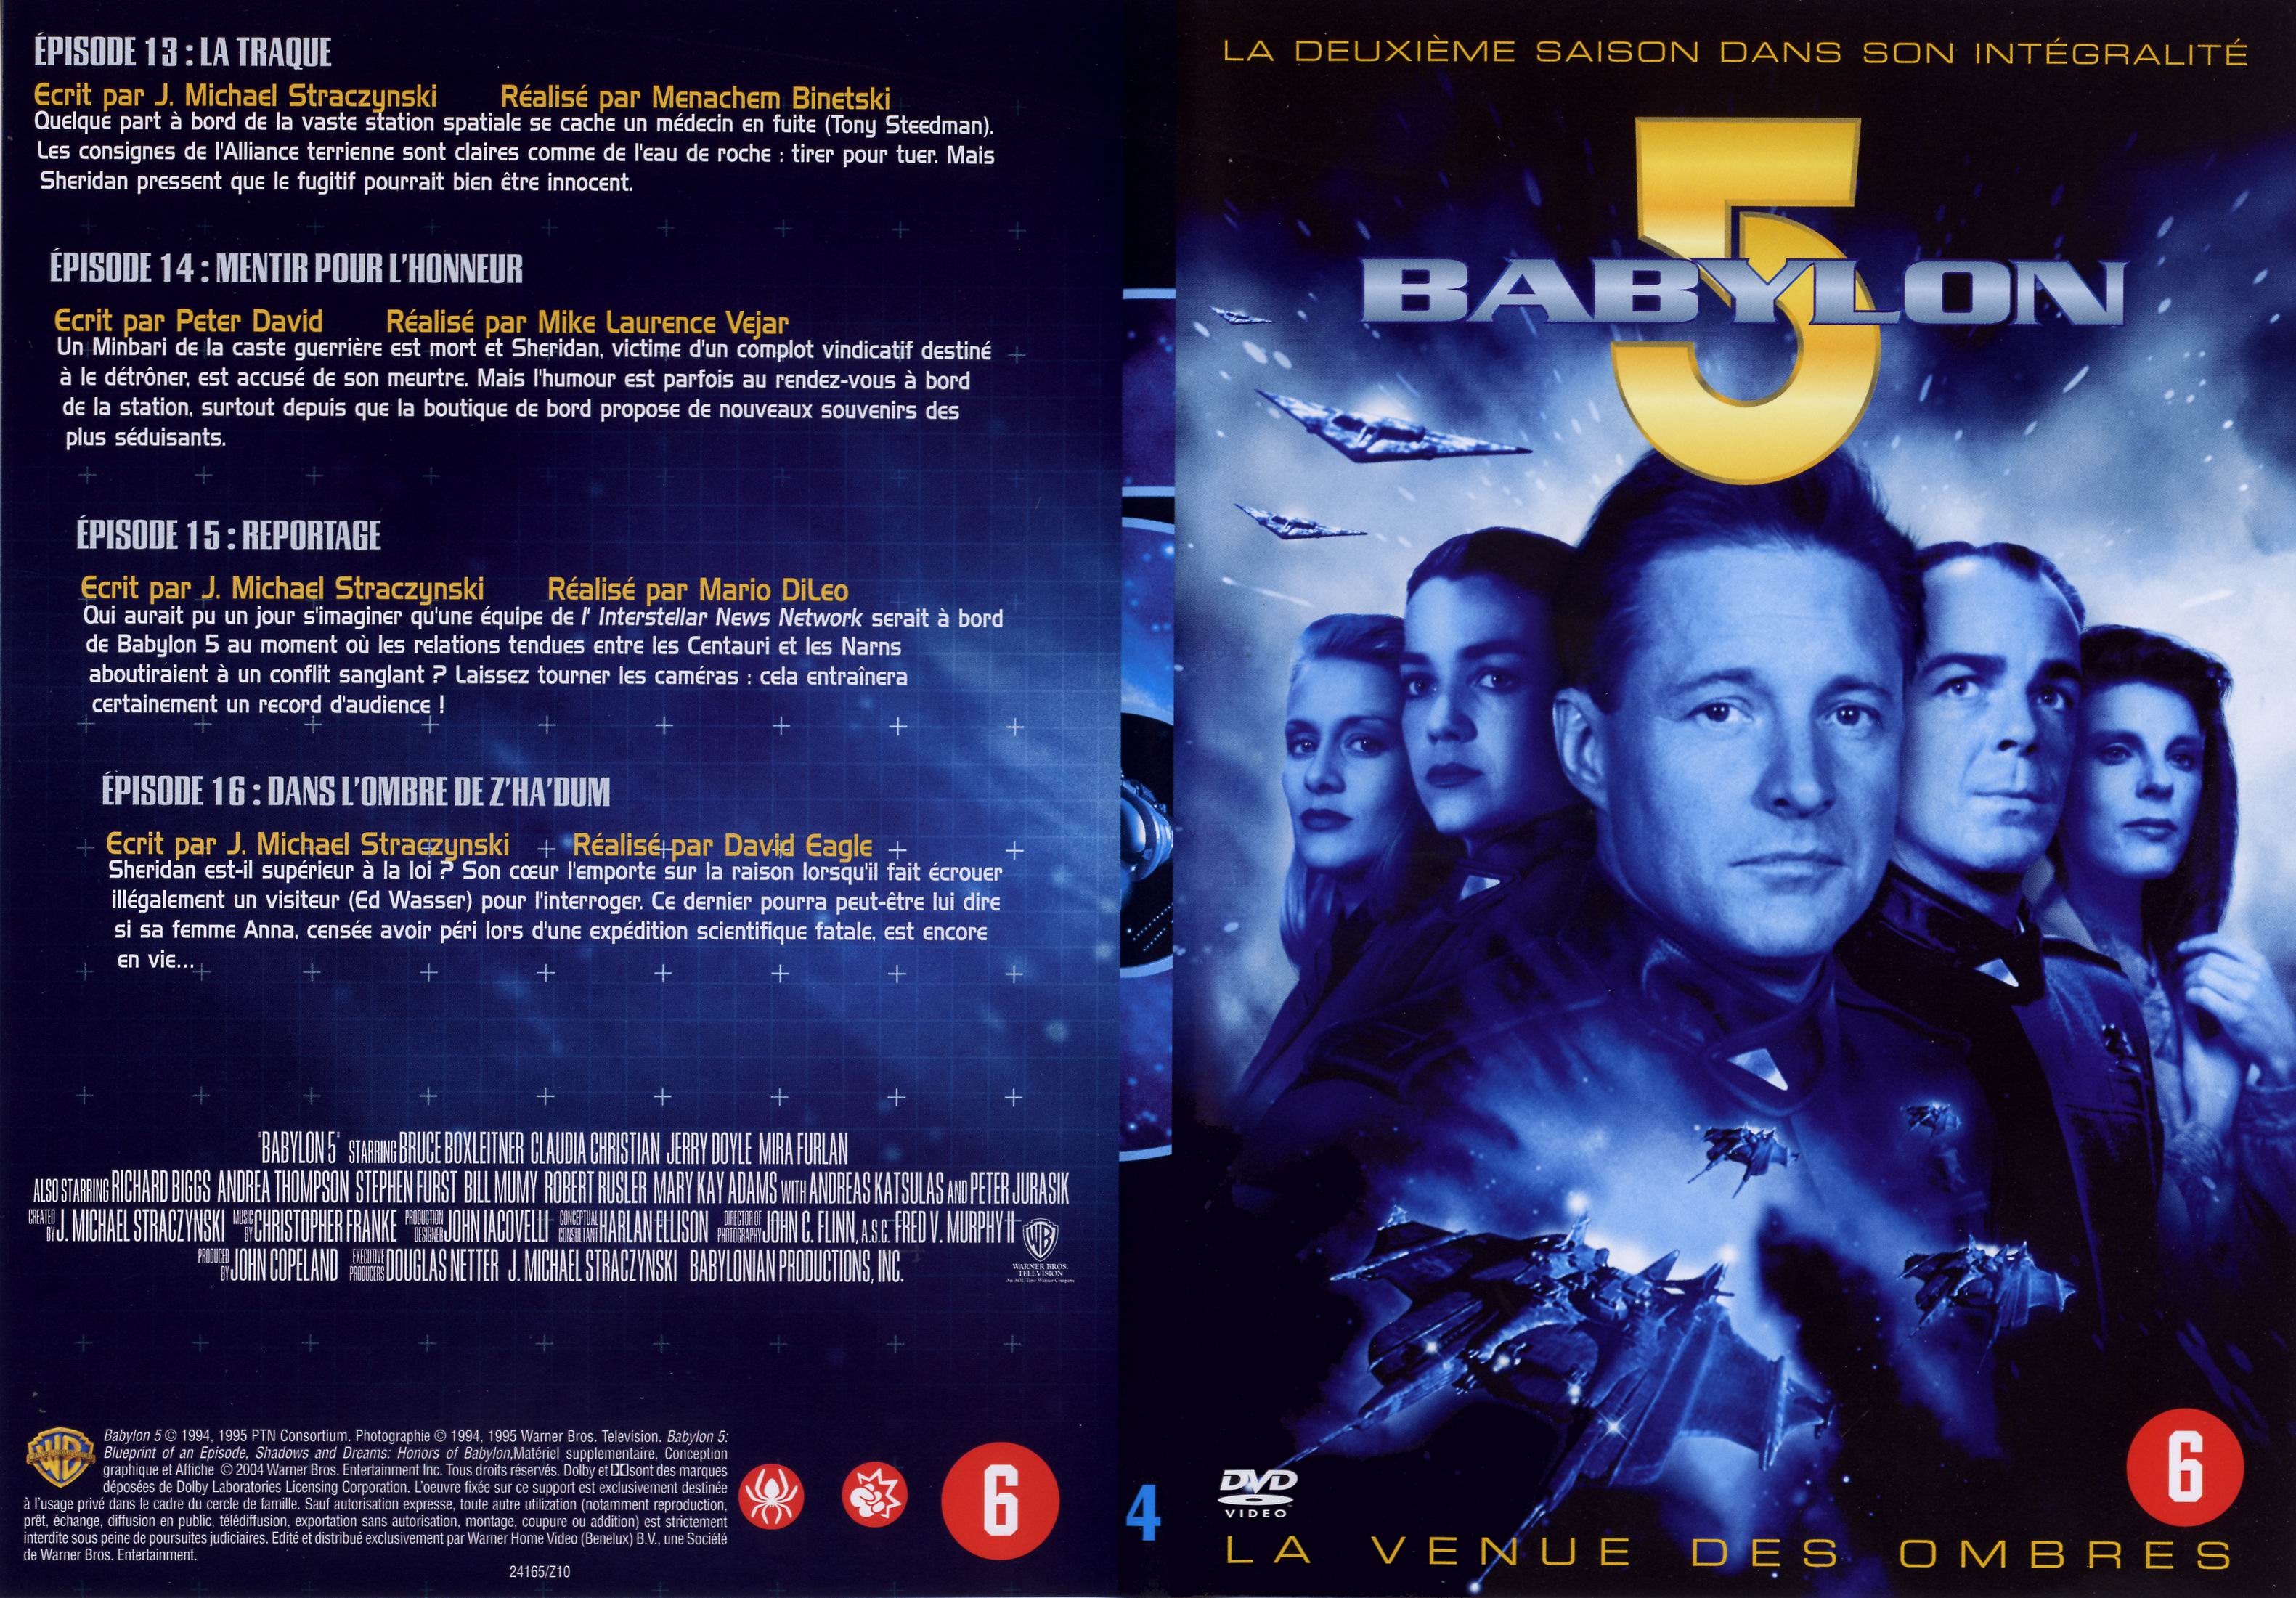 Jaquette DVD Babylon 5 saison 2 dvd 4